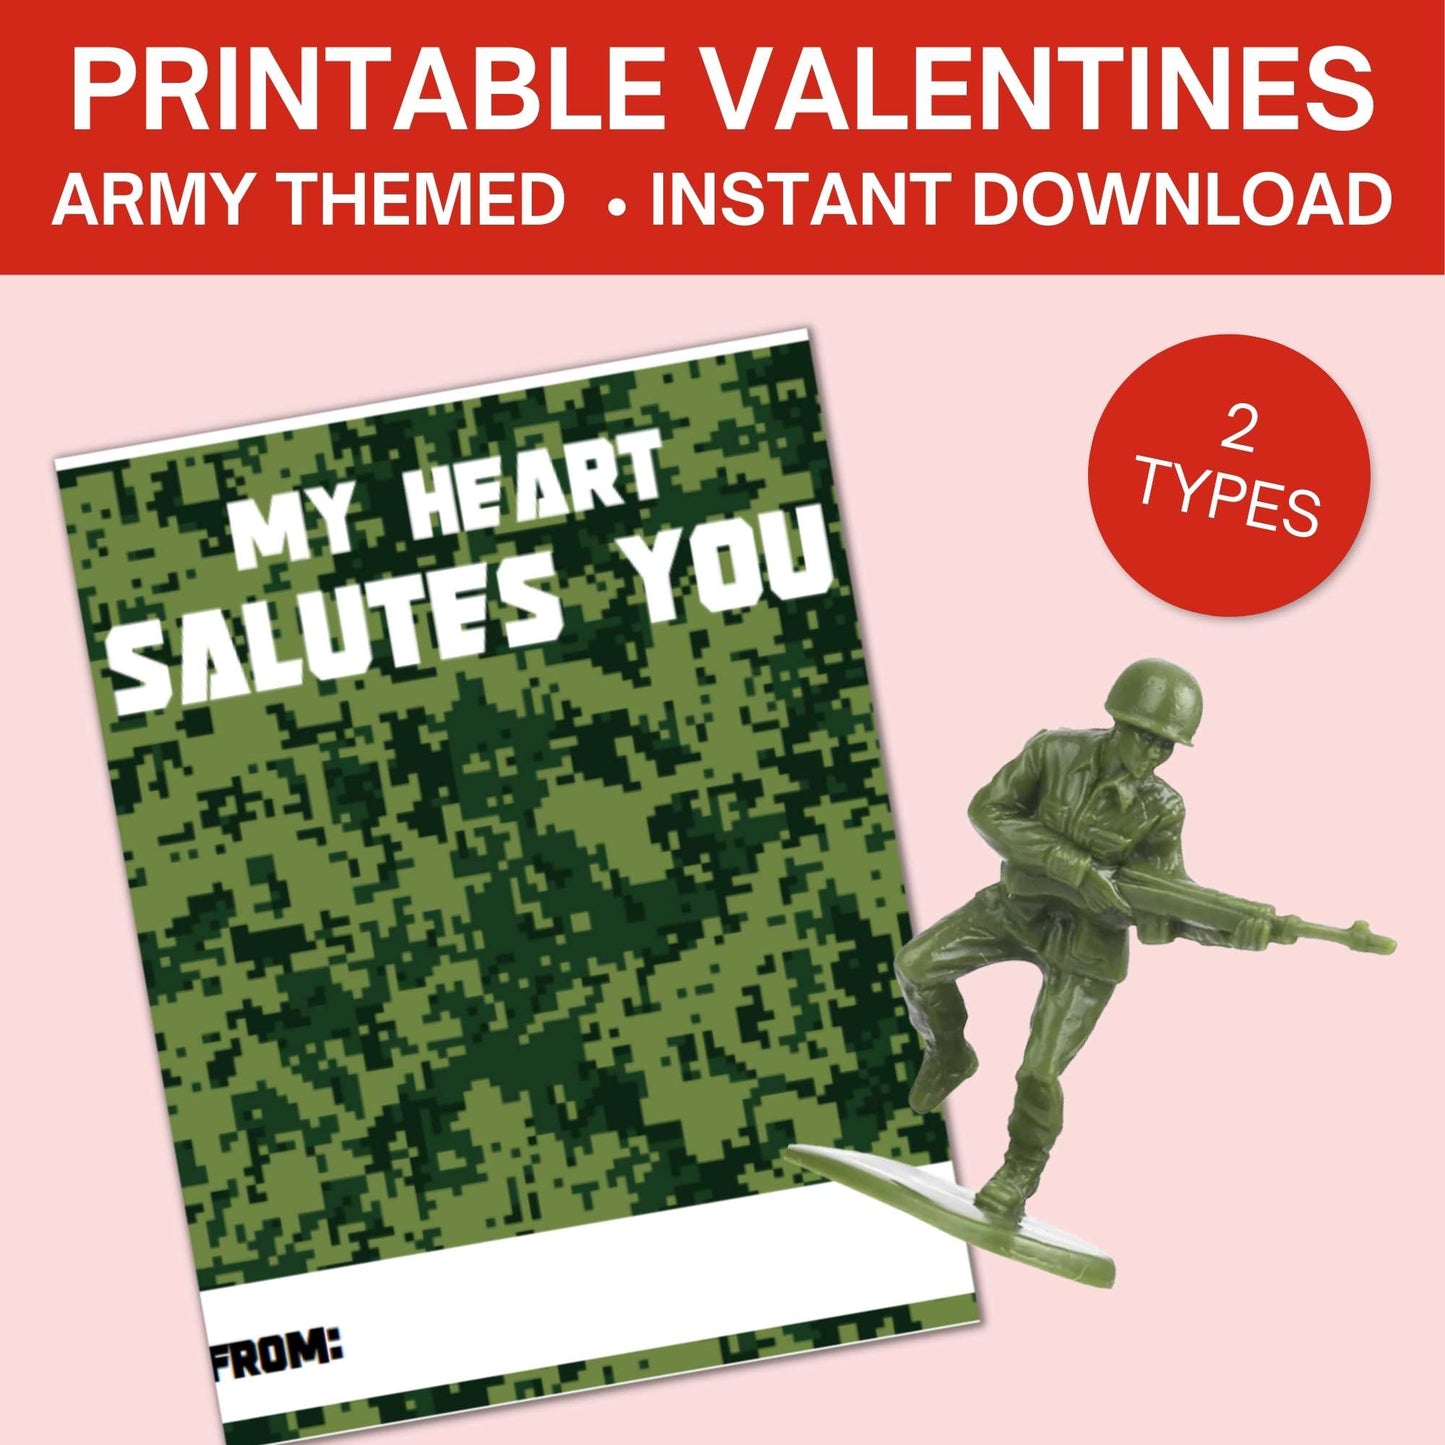 Army Printable Valentines Cards